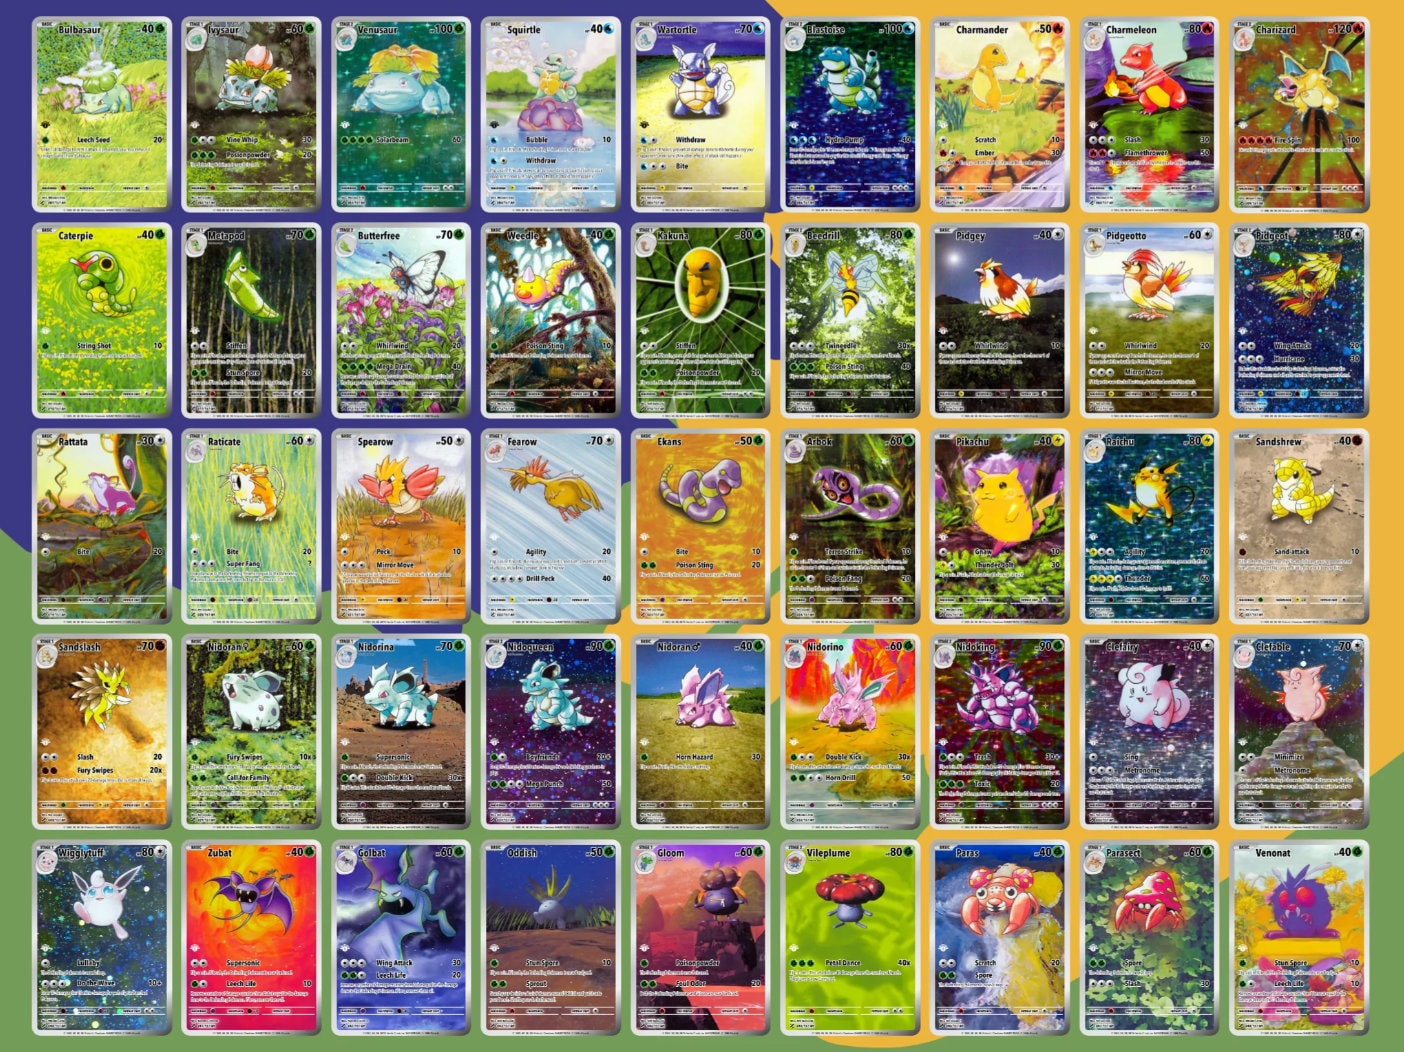 151 PokeArtica Gen 1 - AI Full Art of the Original 151 Pokemon Collection! Mixed of Holo and Non Holo